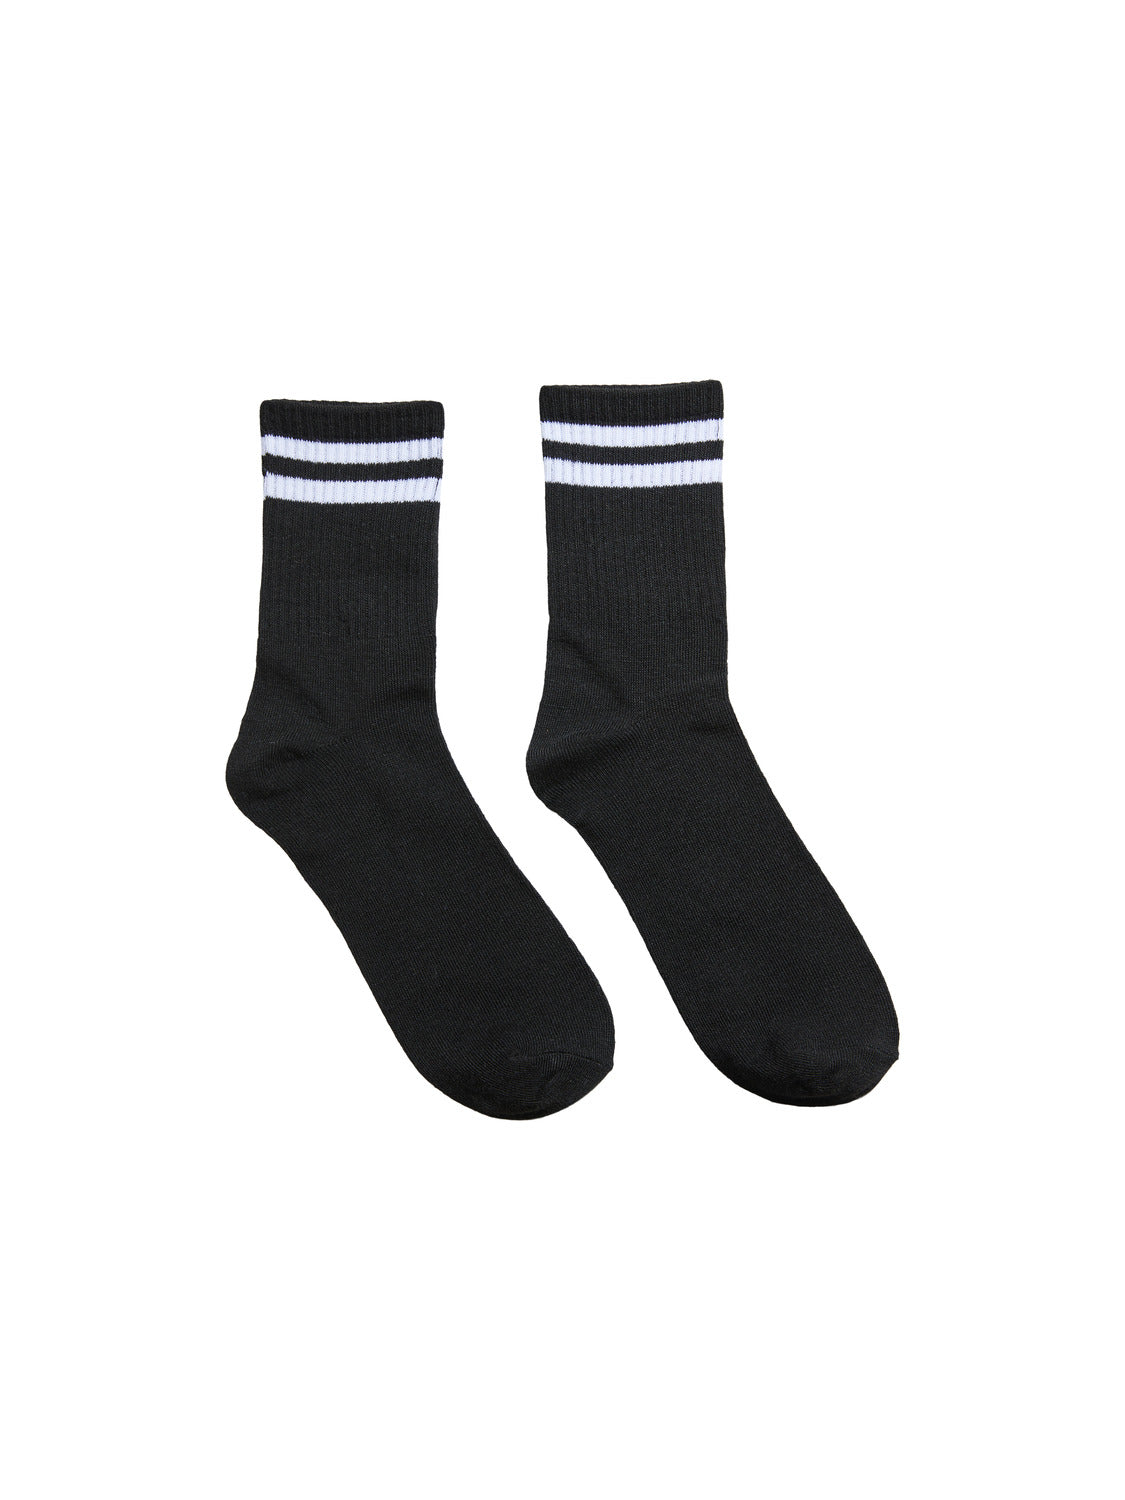 PCCALLY Socks - Black